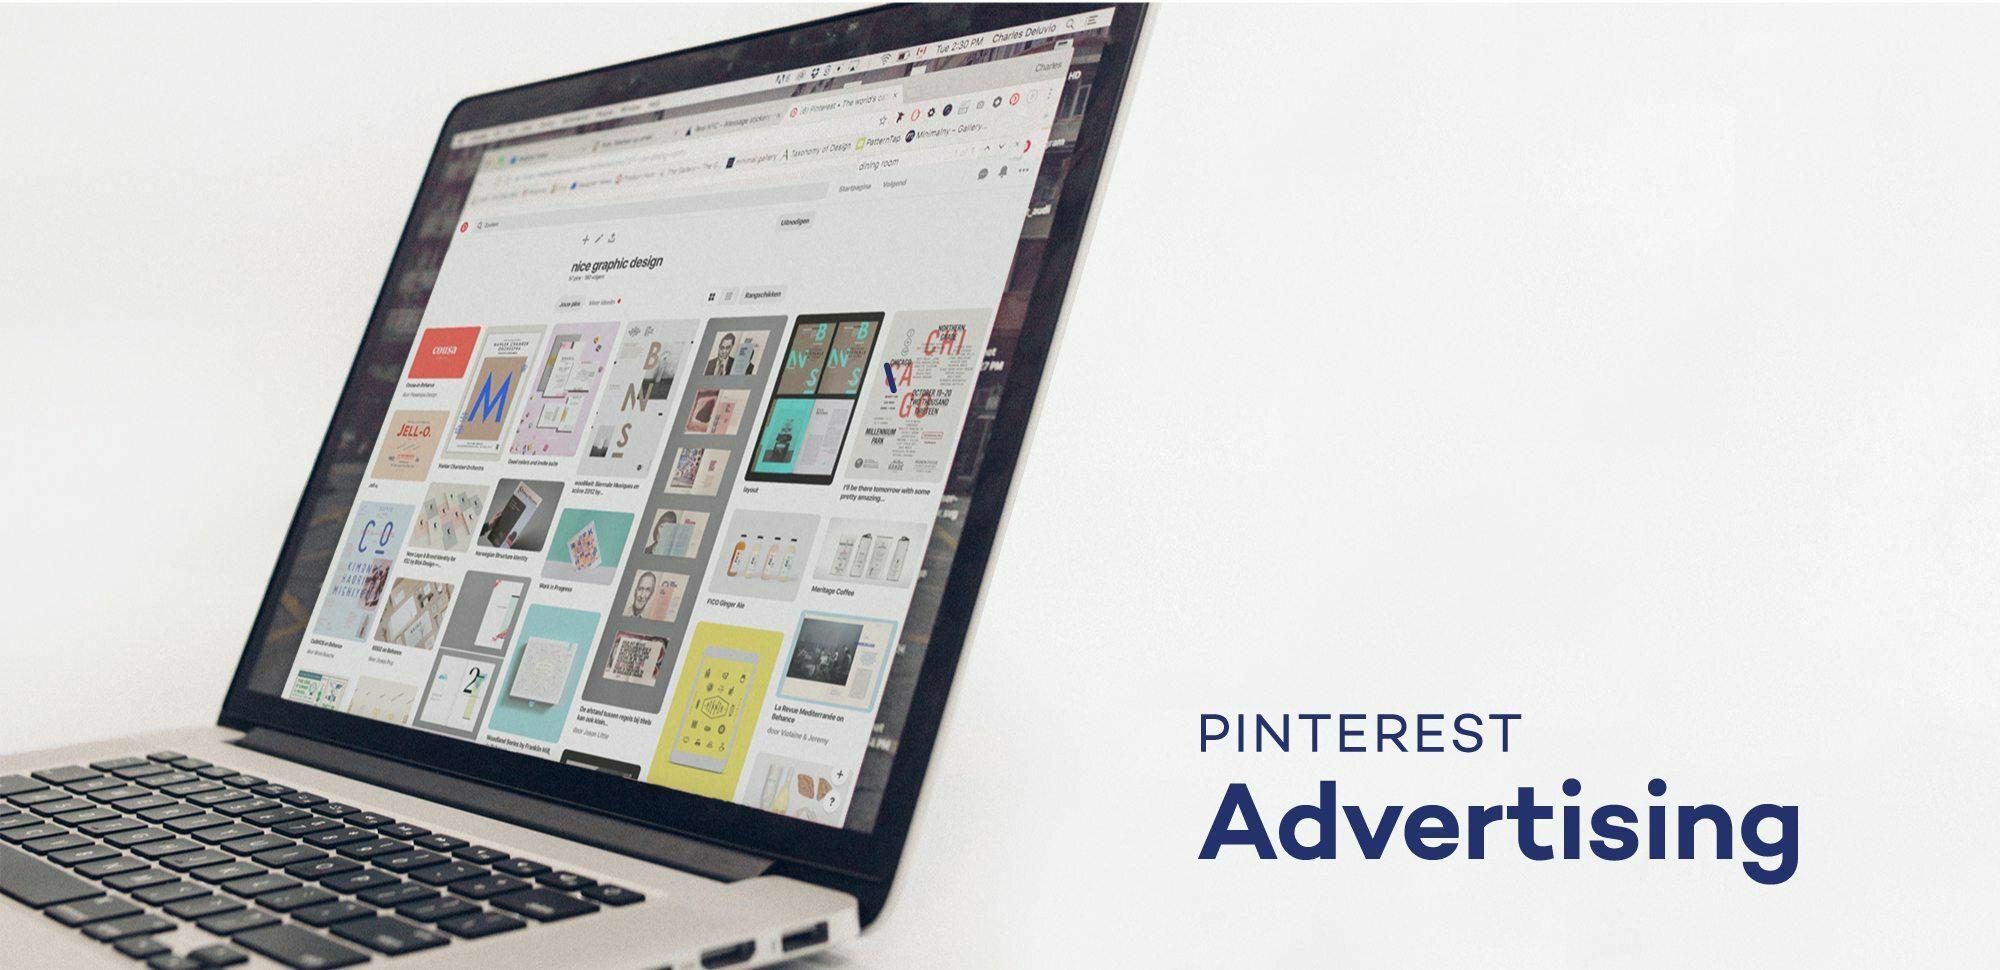 Pinterest advertising: dit is waarom je Pinterest ads moet opzetten